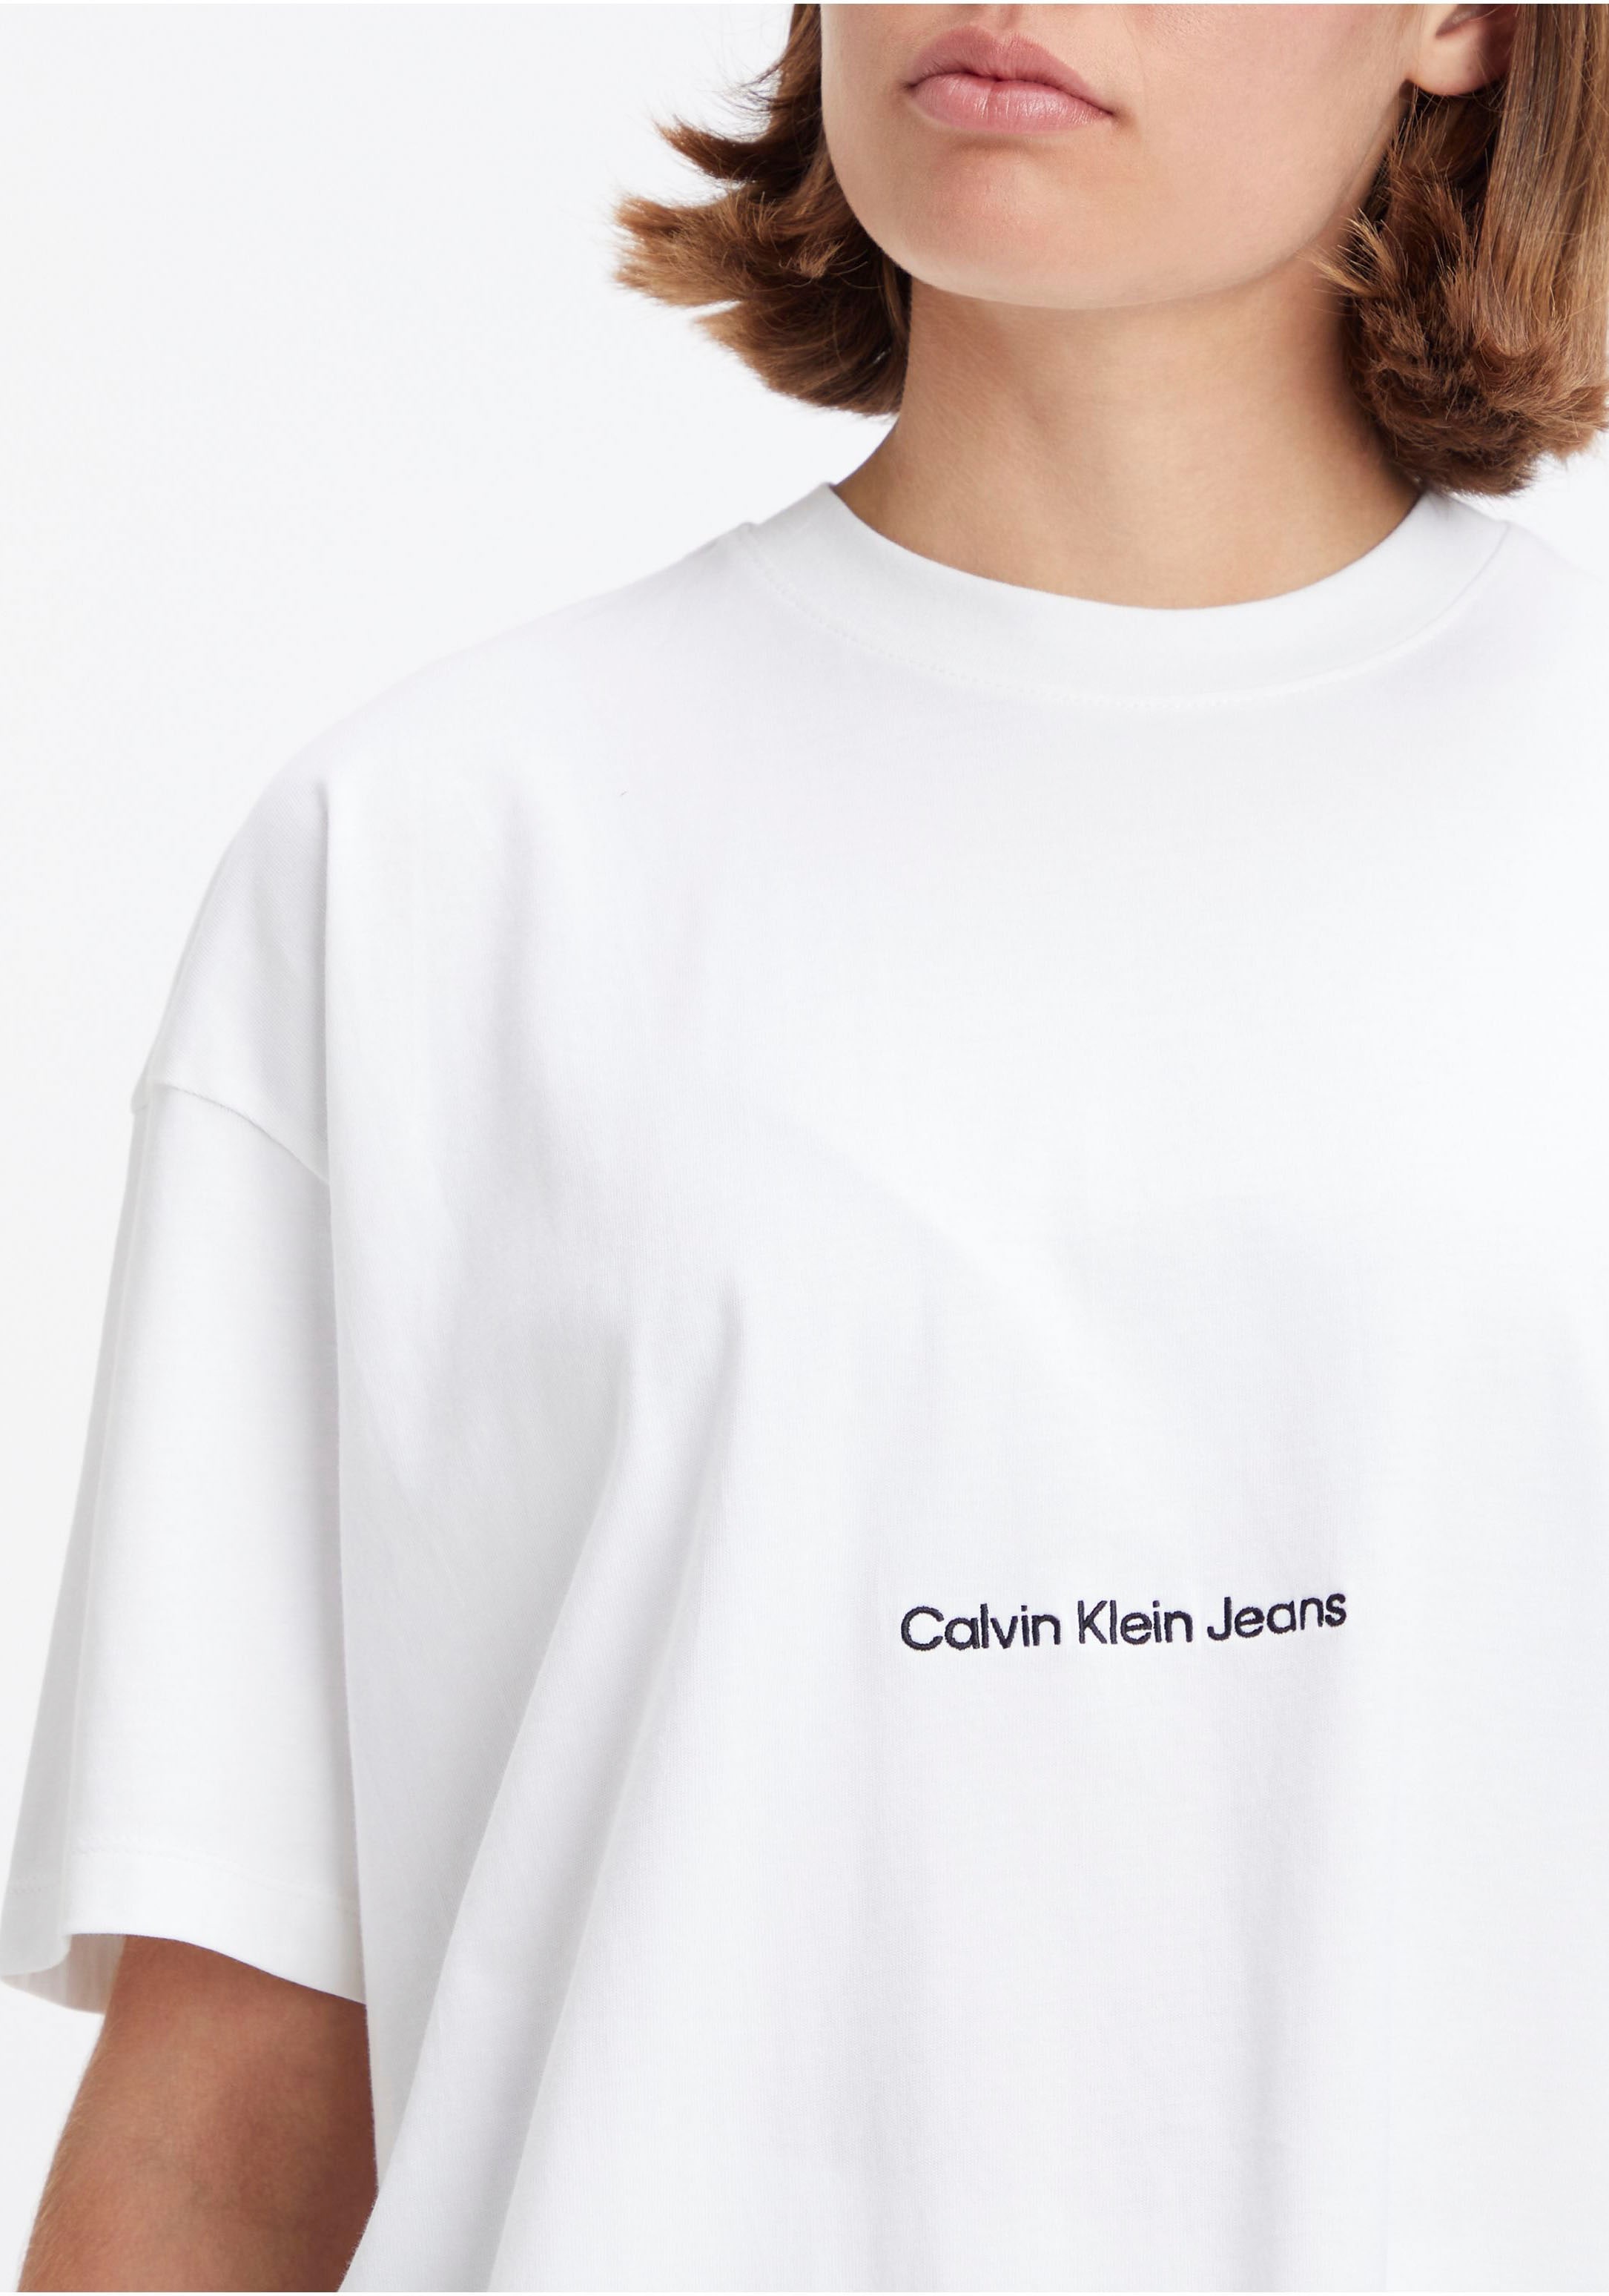 Calvin in Jeans bestellen Klein T-Shirt, Oversized-Passform